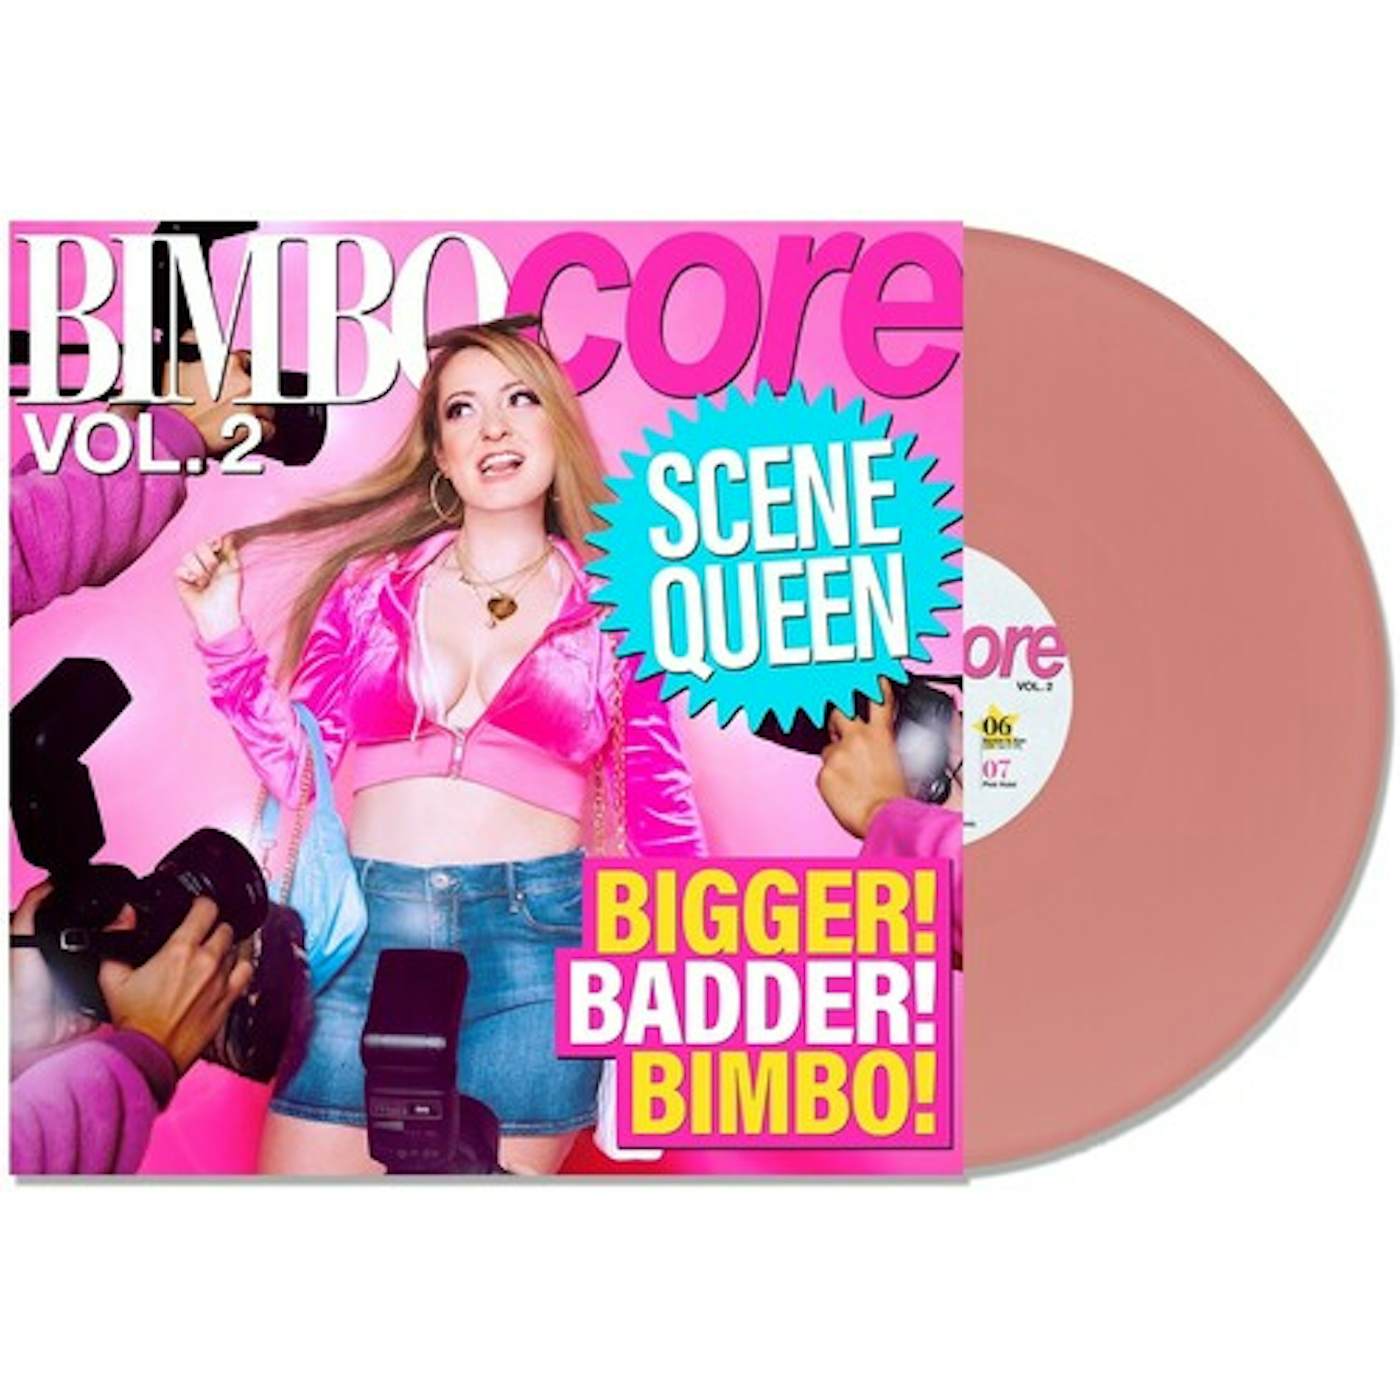 Scene Queen Bimbocore Vol. 2 Vinyl Record